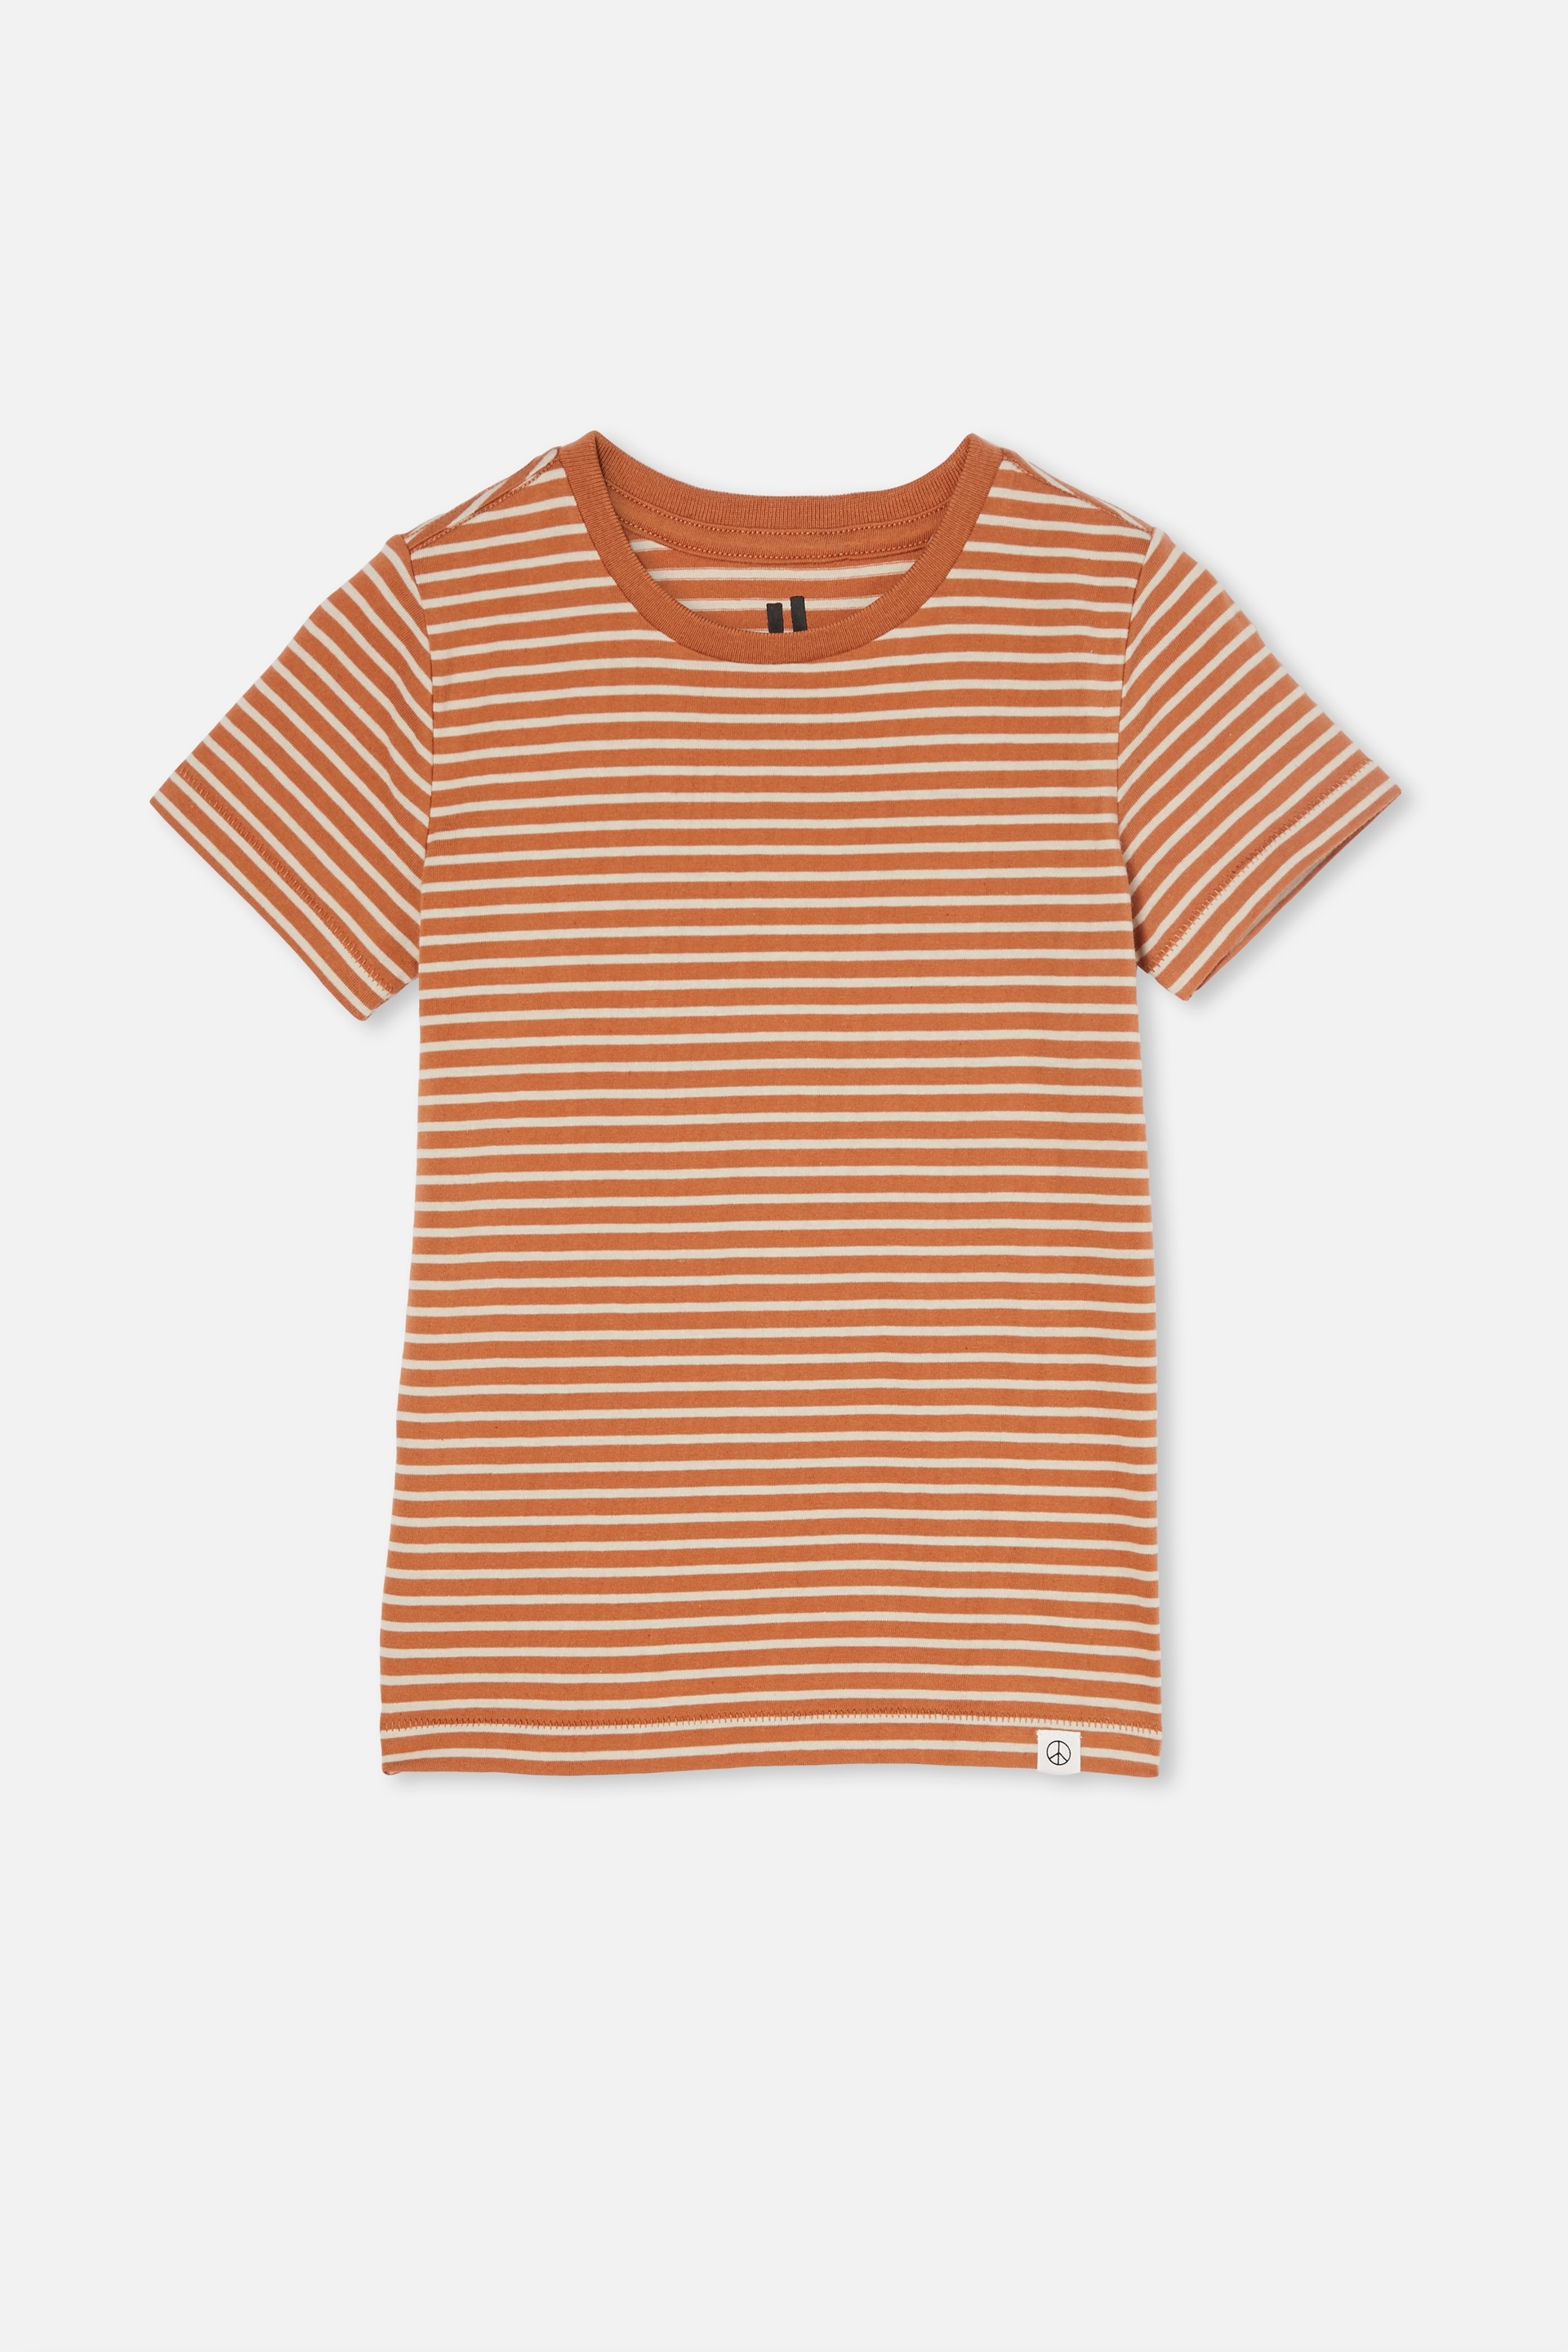 Cotton On Kids - Core Short Sleeve Tee - Amber brown/rainy day stripe